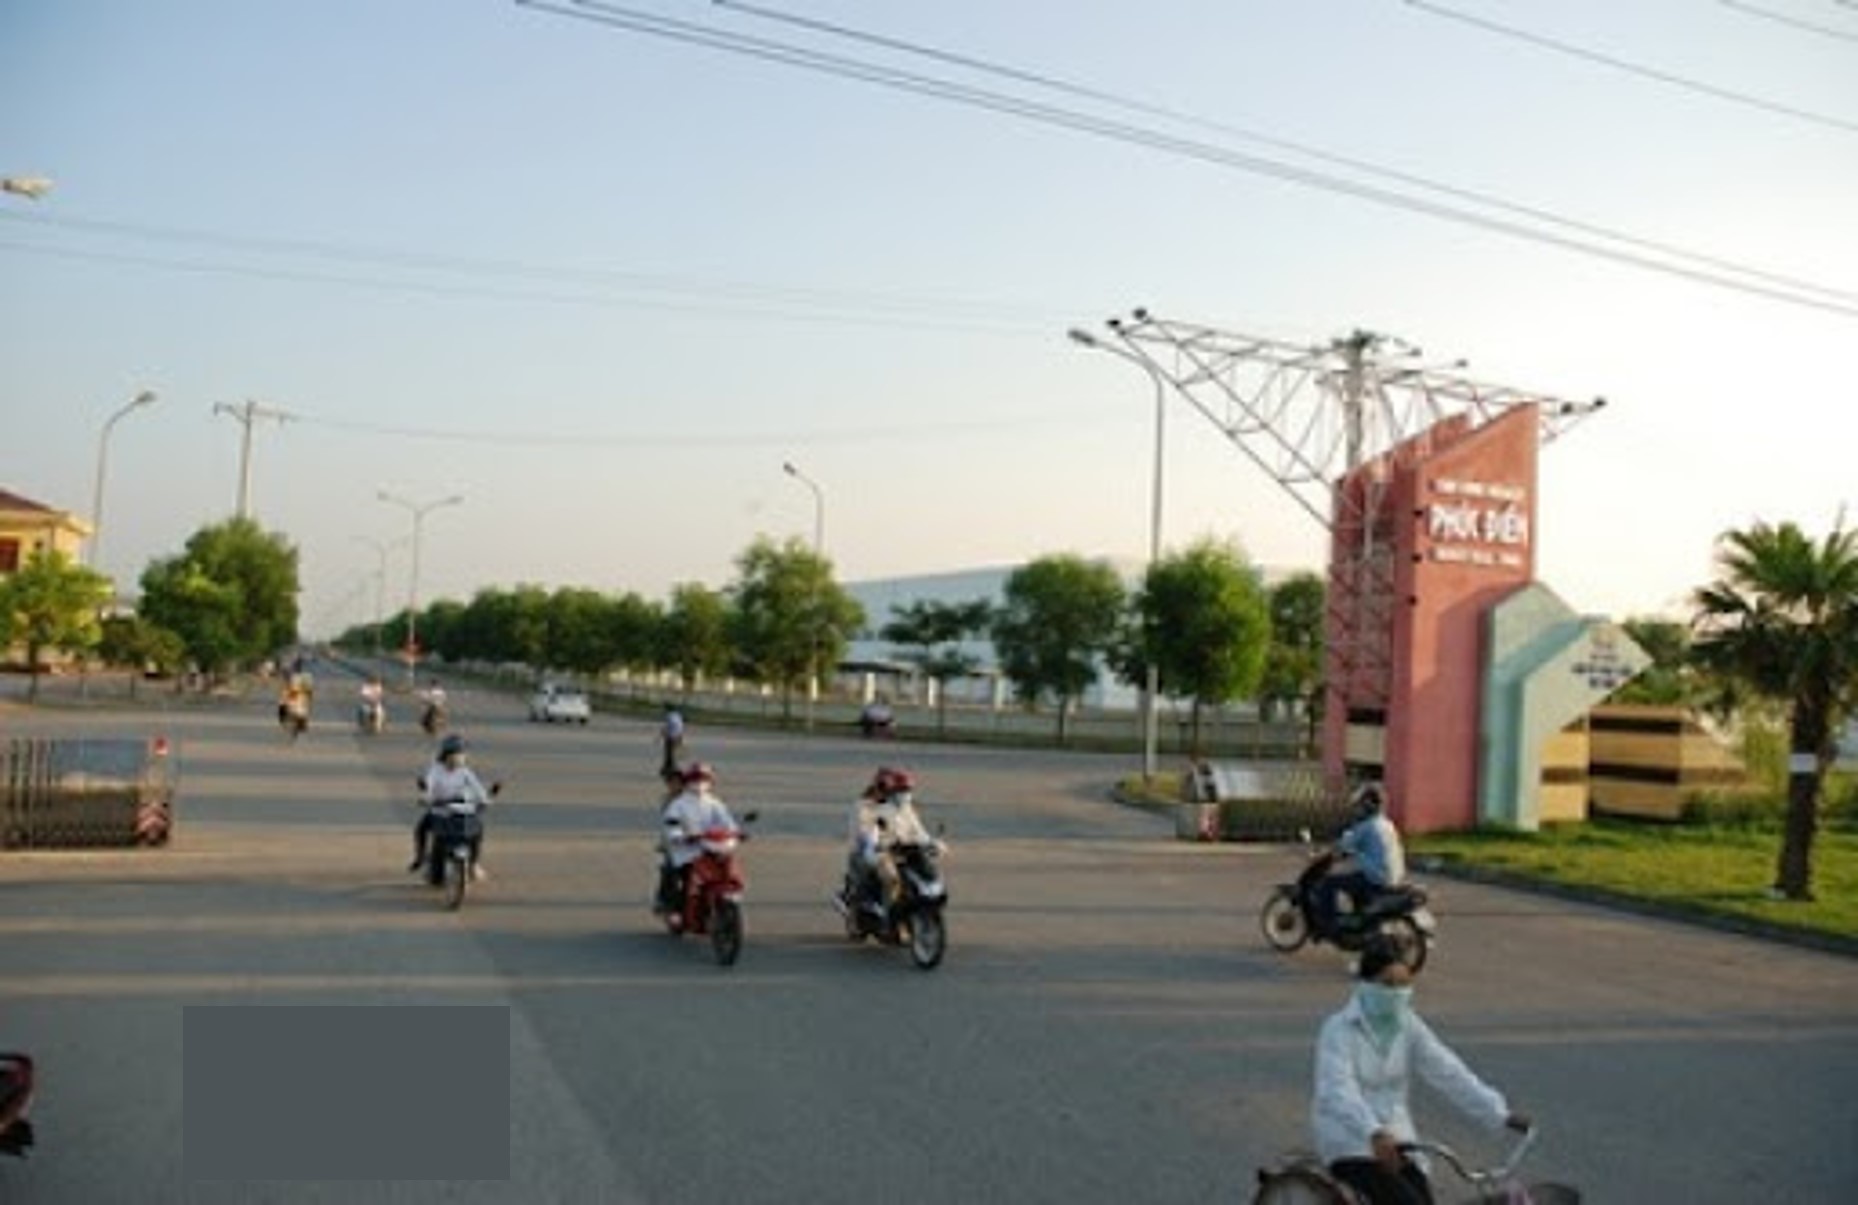 Phuc Dien Industrial Park